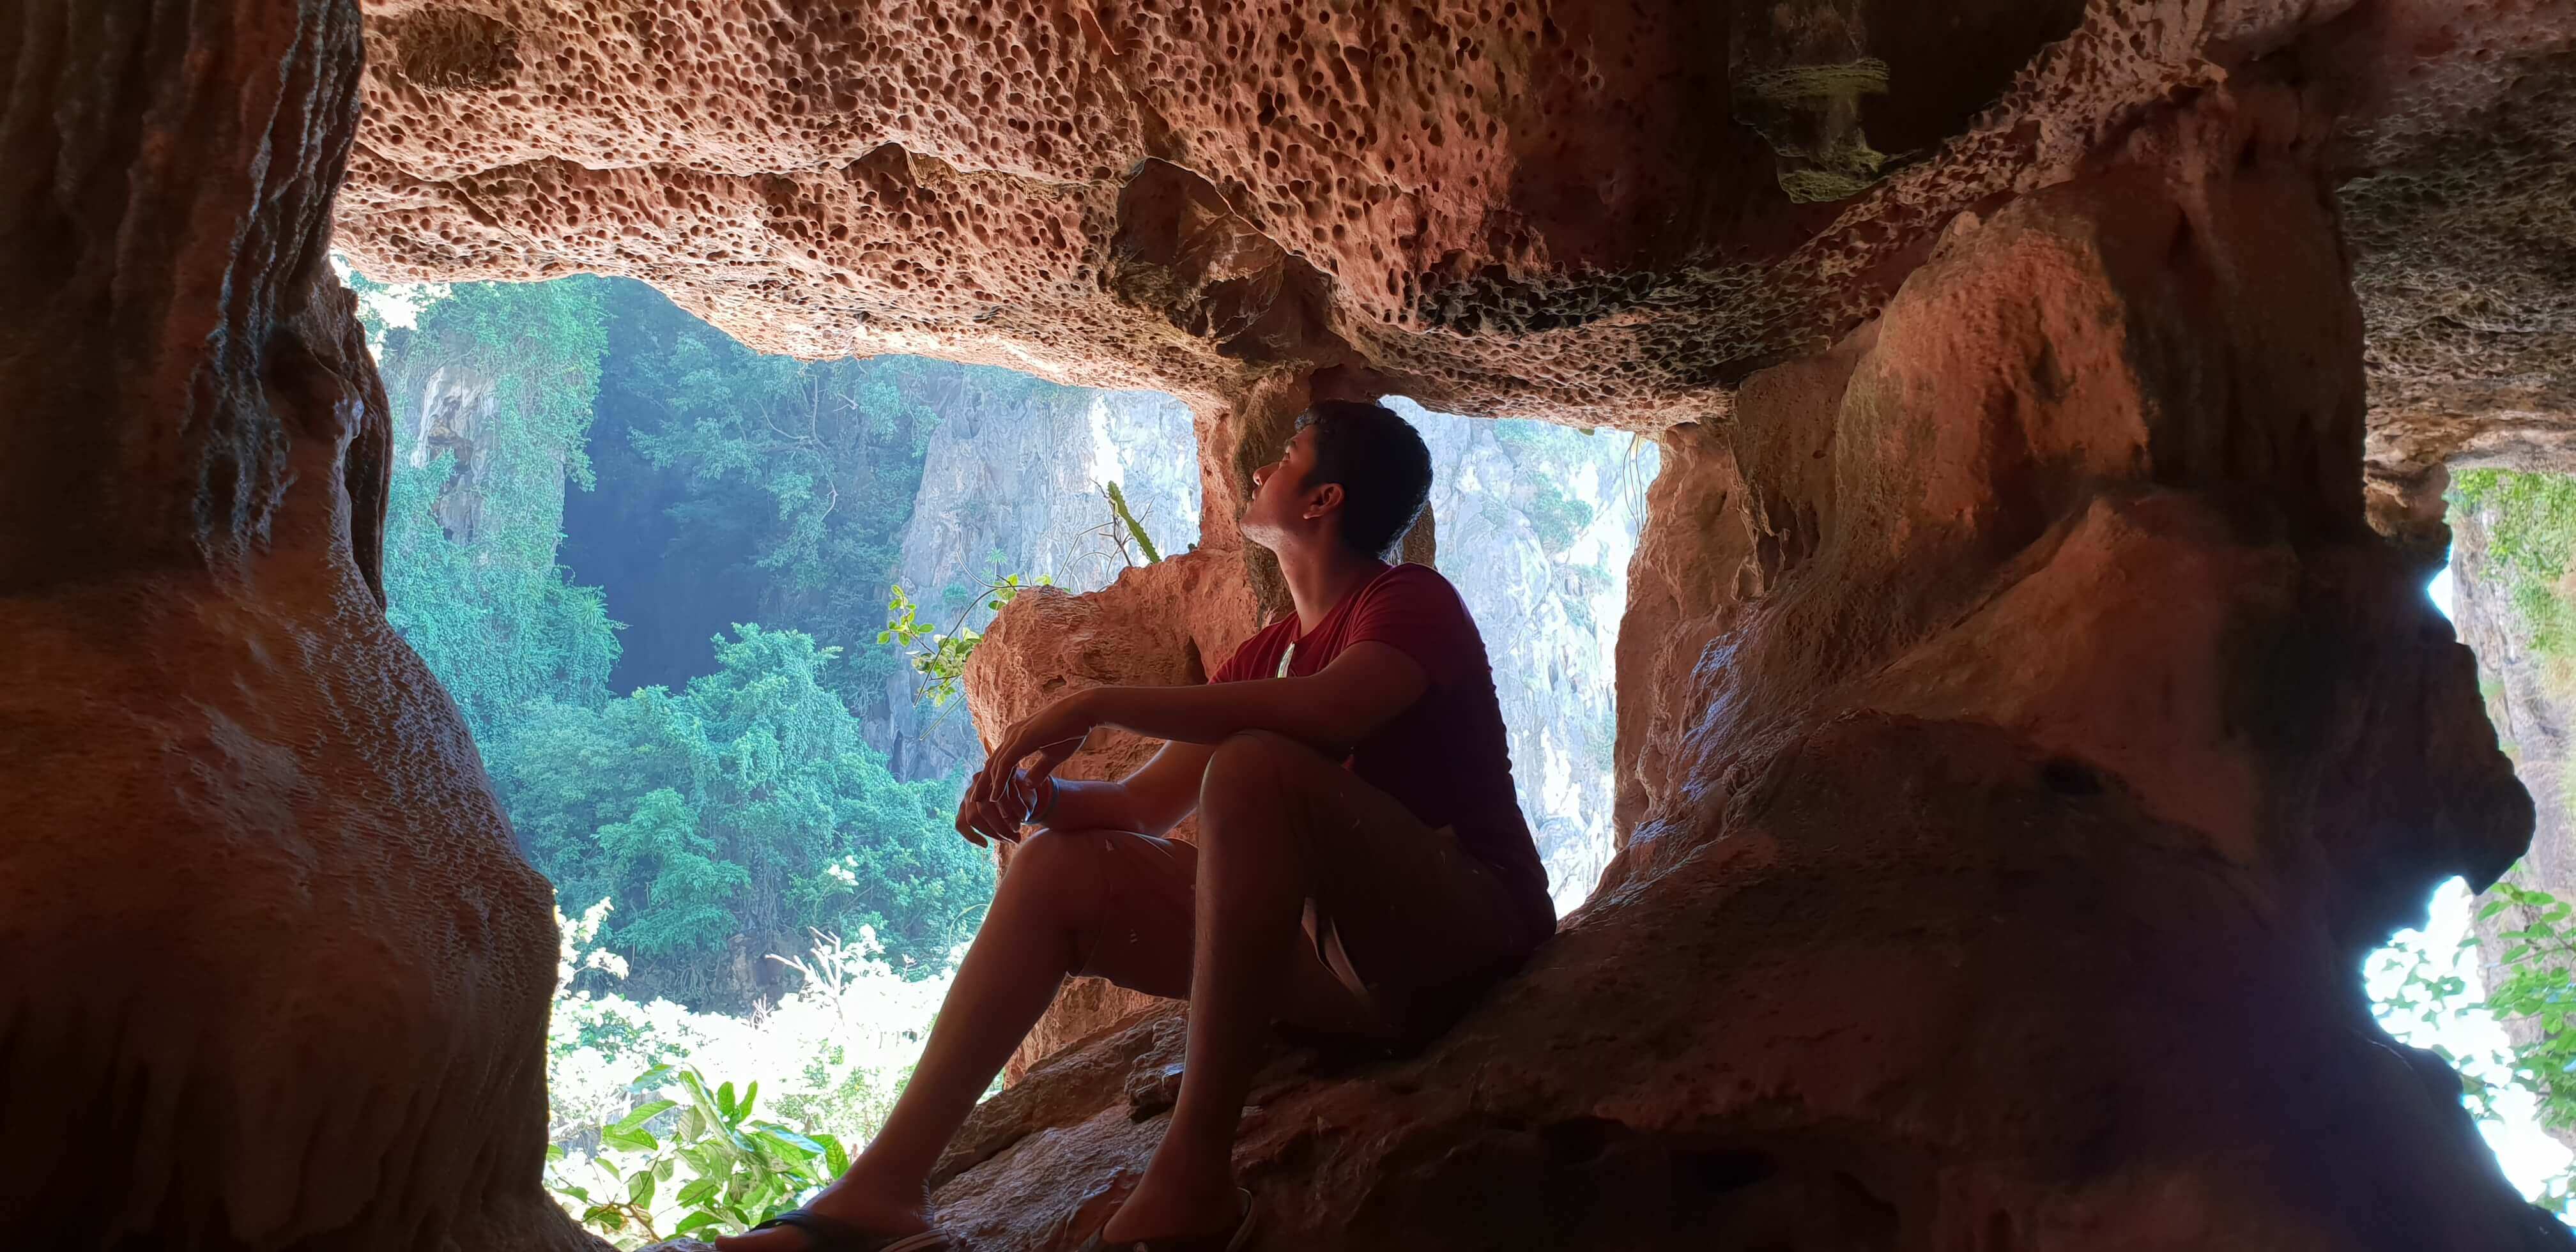 Enjoy exploring the natural cave at James Bond island